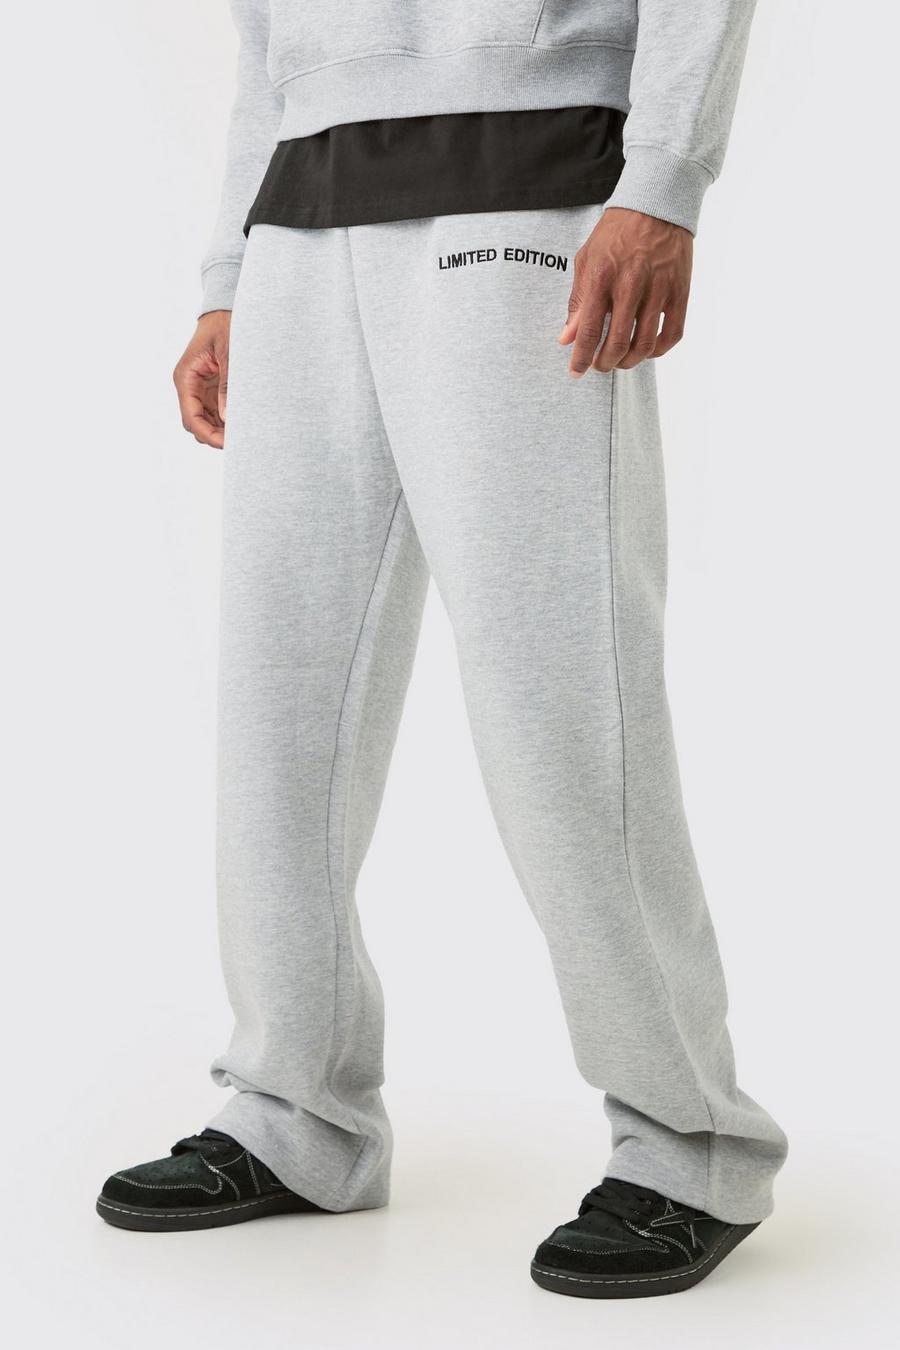 Pantalón deportivo Tall holgado Limited, Grey marl